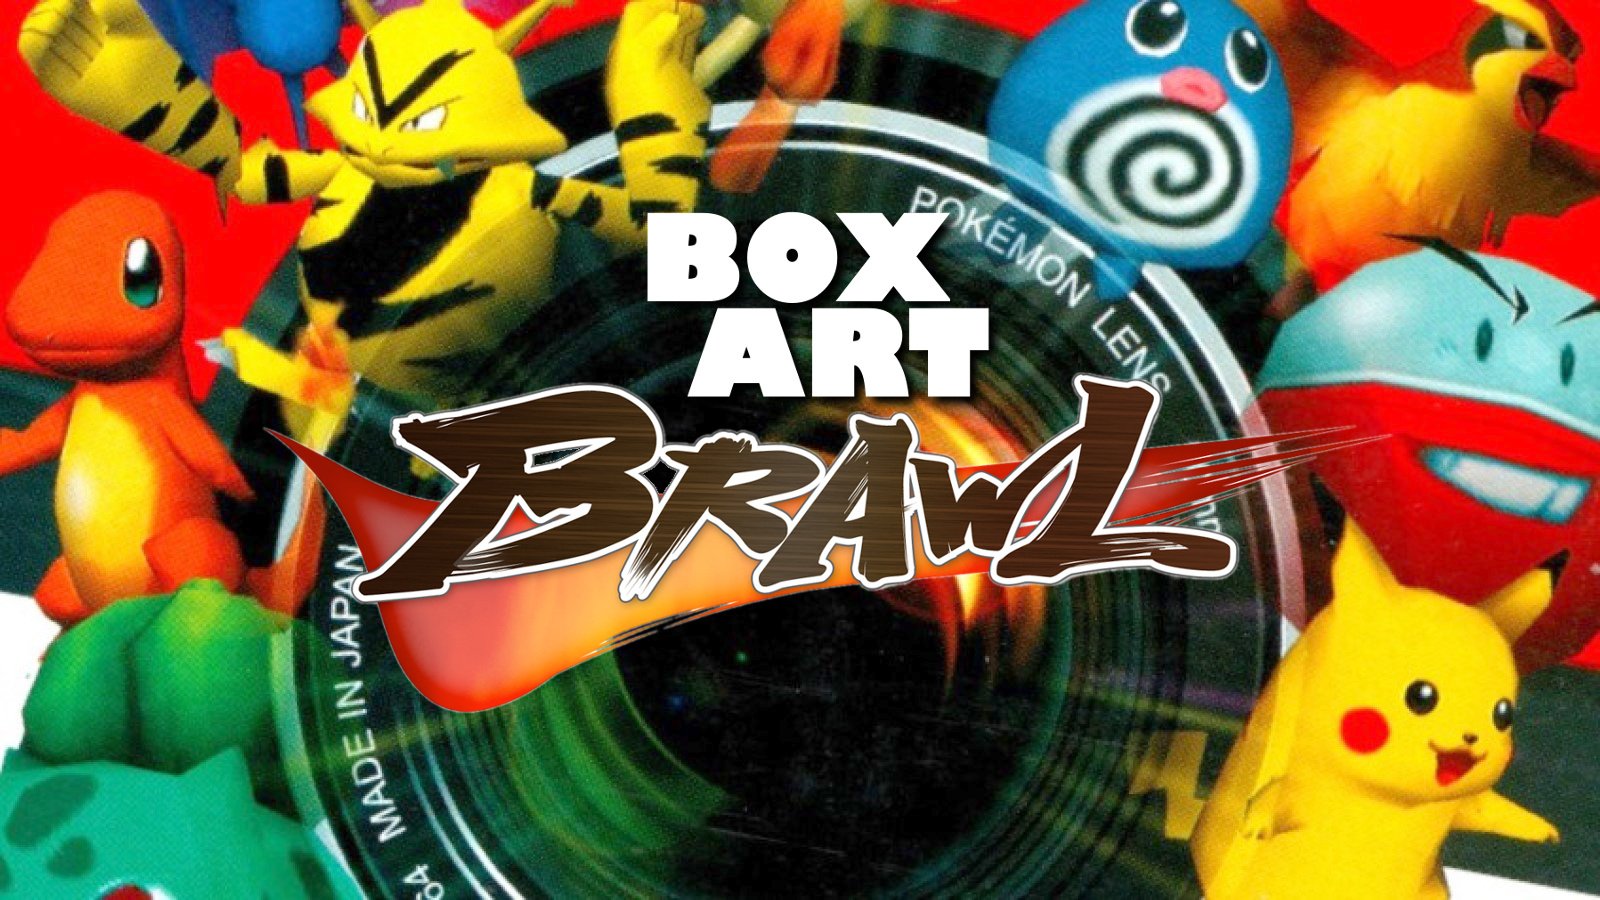 Poll Box Art Brawl 84 Pokemon Snap Nintendo Life - overlays de brawl stars 2021